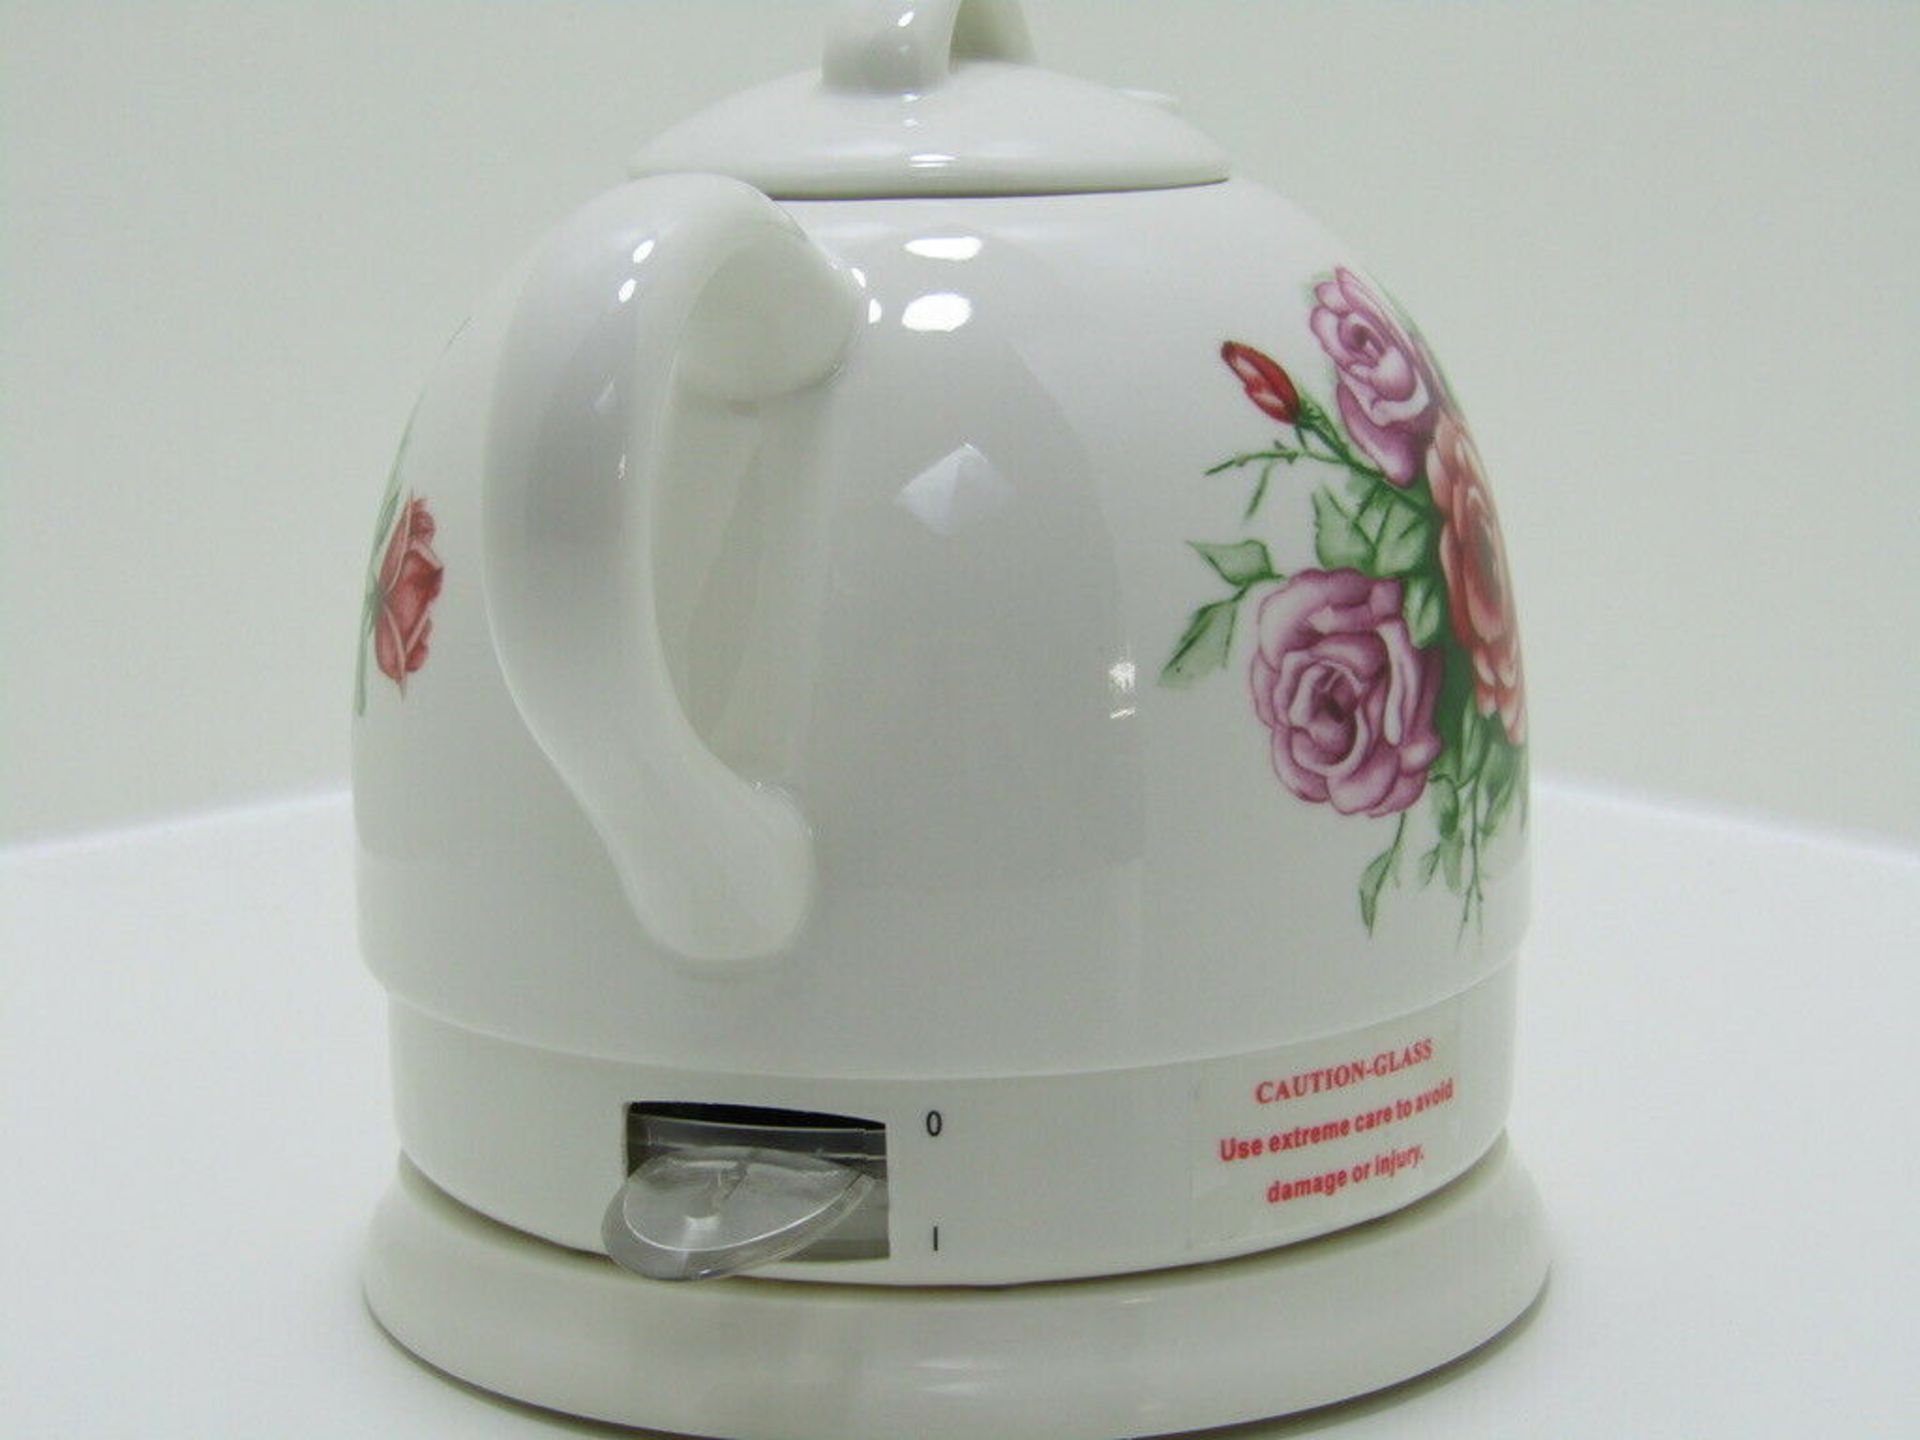 Country Rose Ceramic Kettle. White. Cordless. Tea Pot design. VJ905 - Image 8 of 8